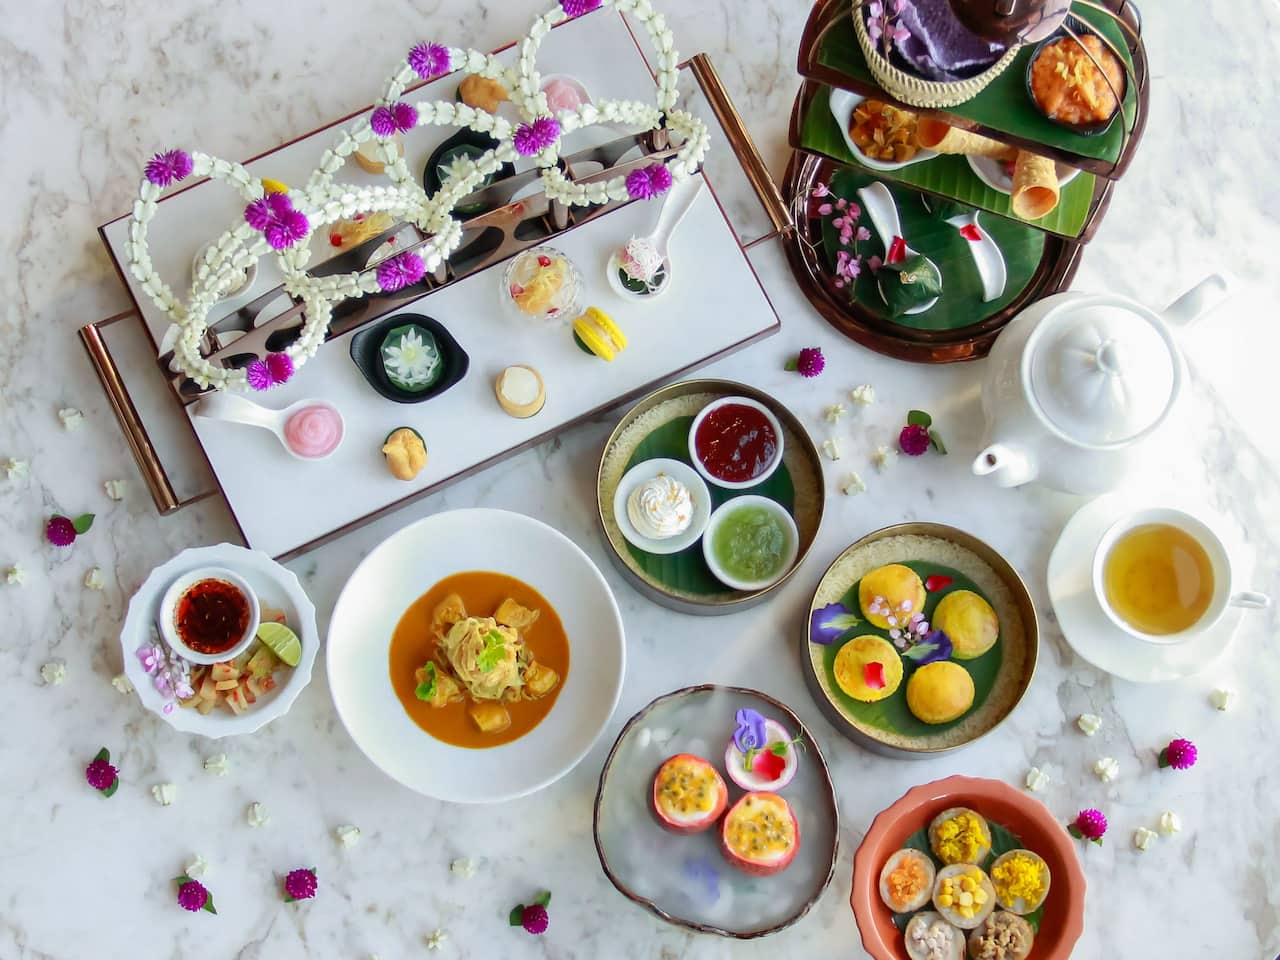 Signature Afternoon Tea Set at Market Café by Khao